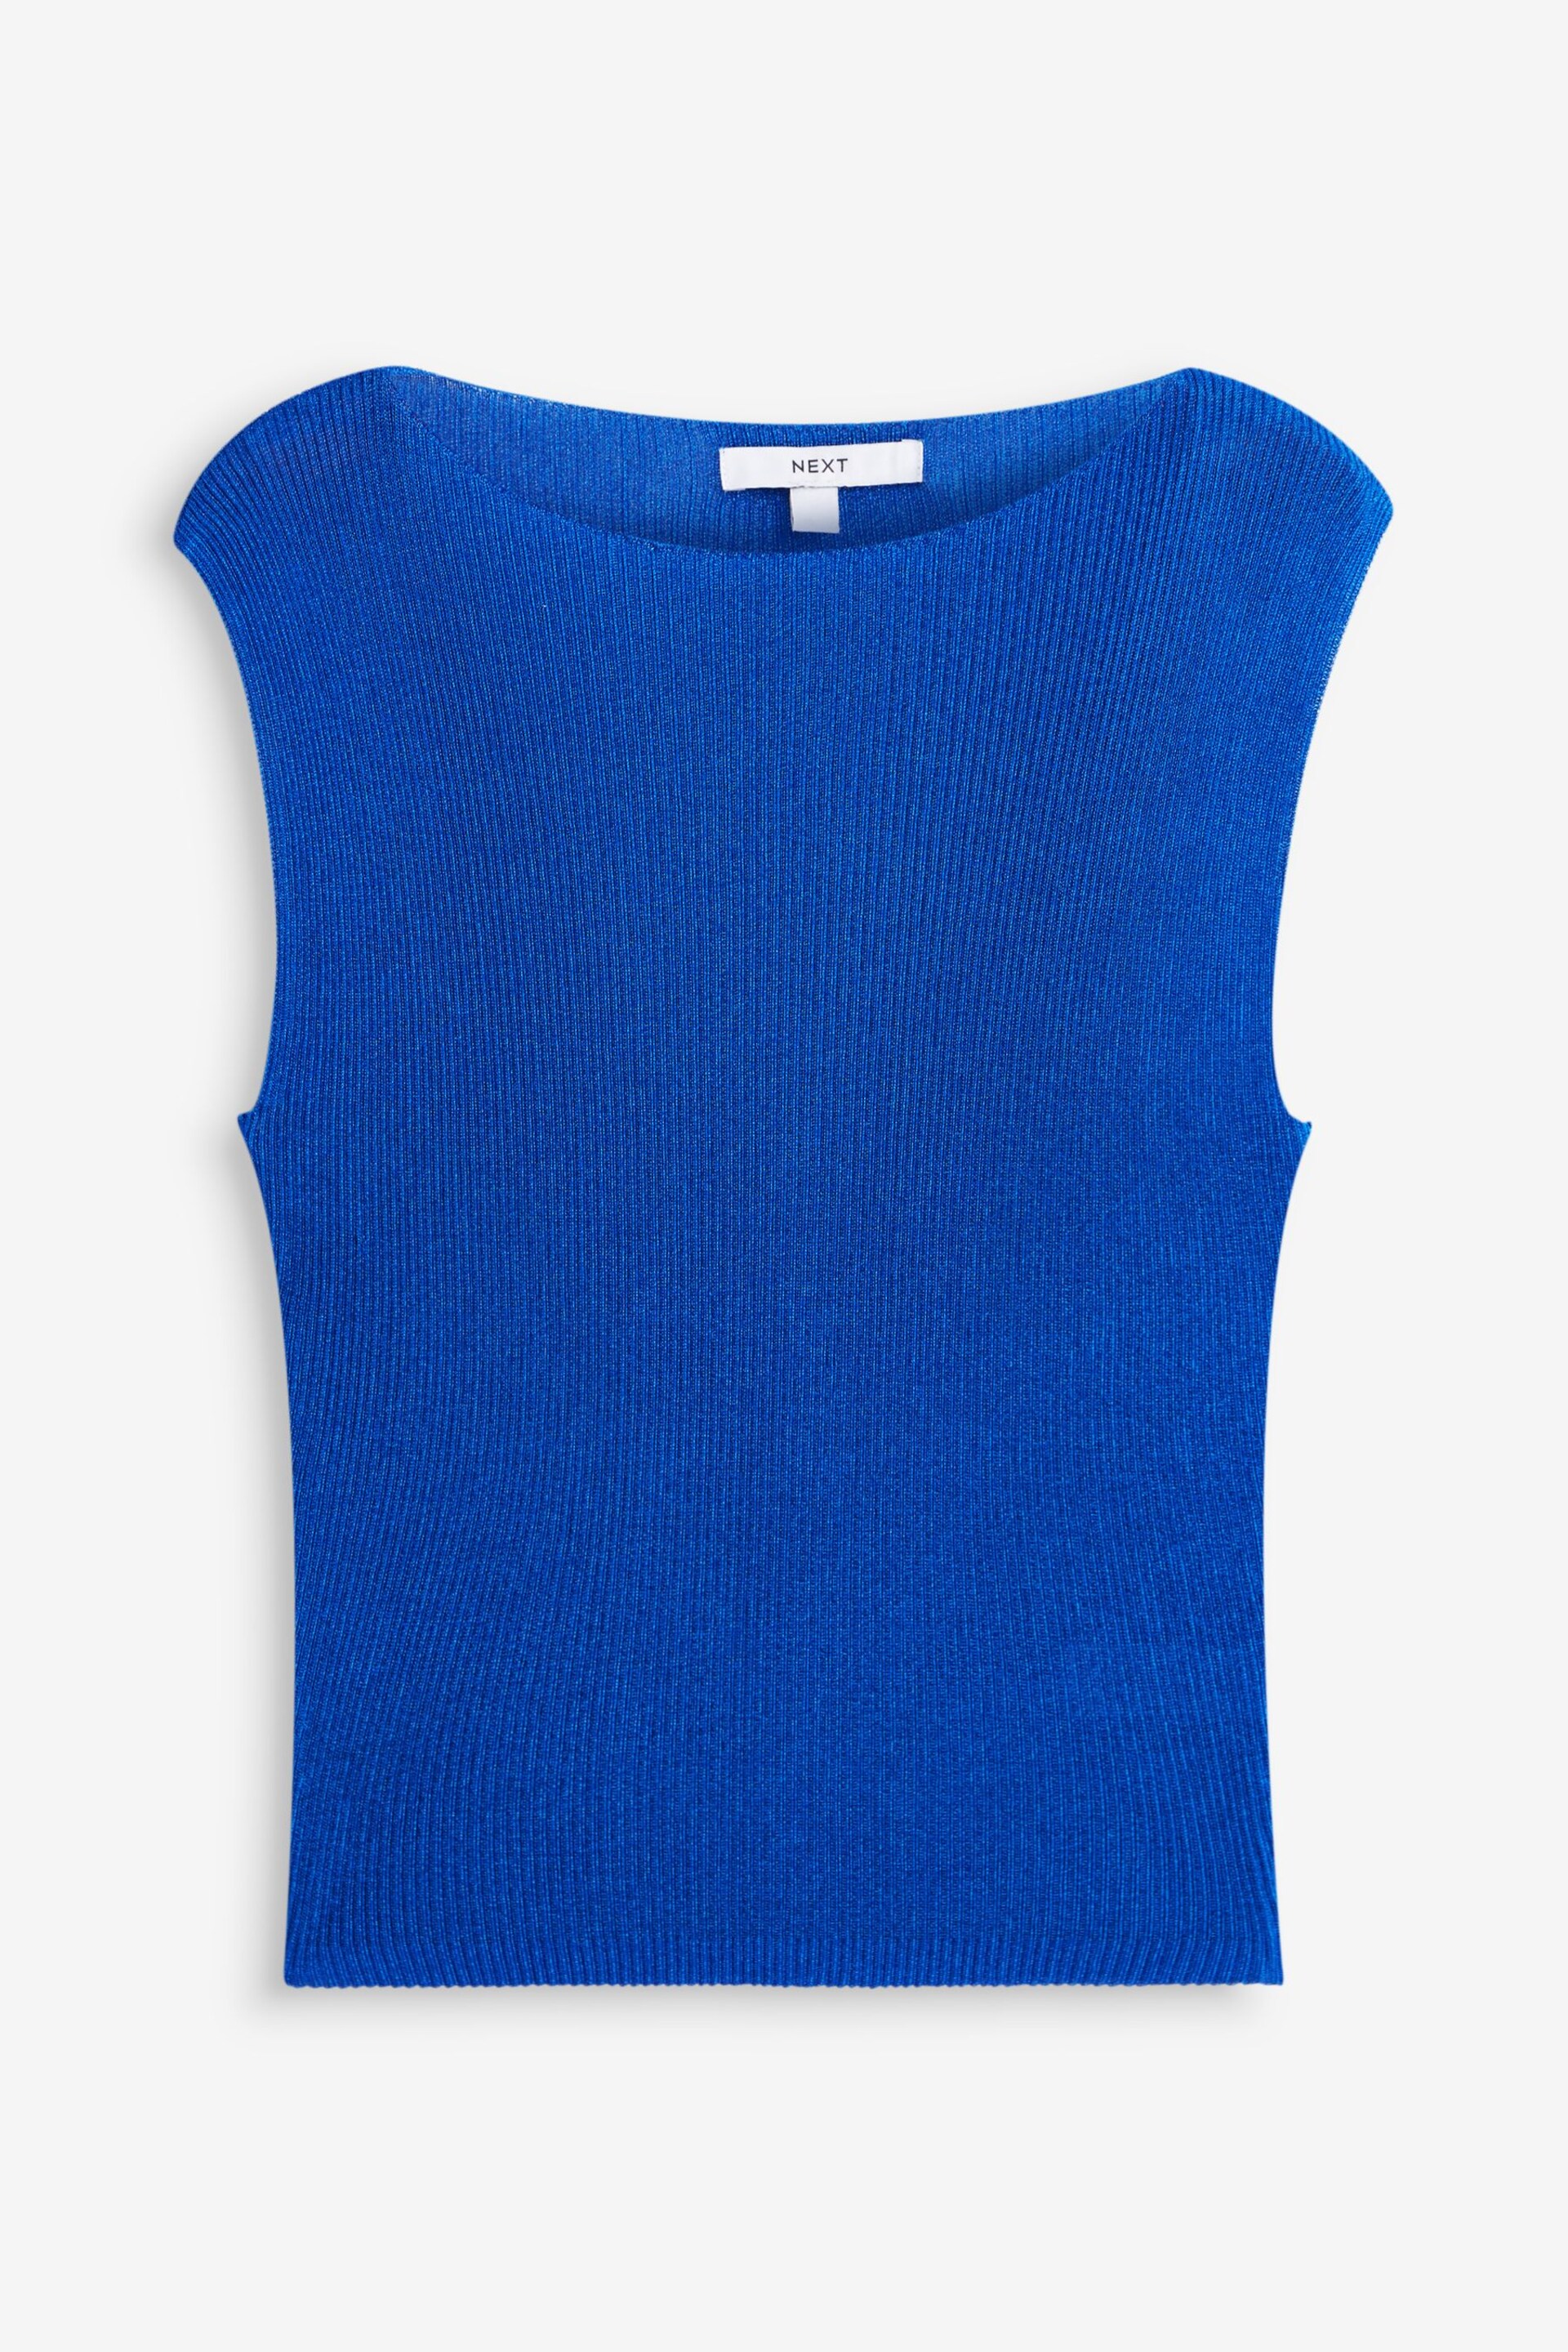 Cobalt Blue Metallic Knitted Vest - Image 5 of 6